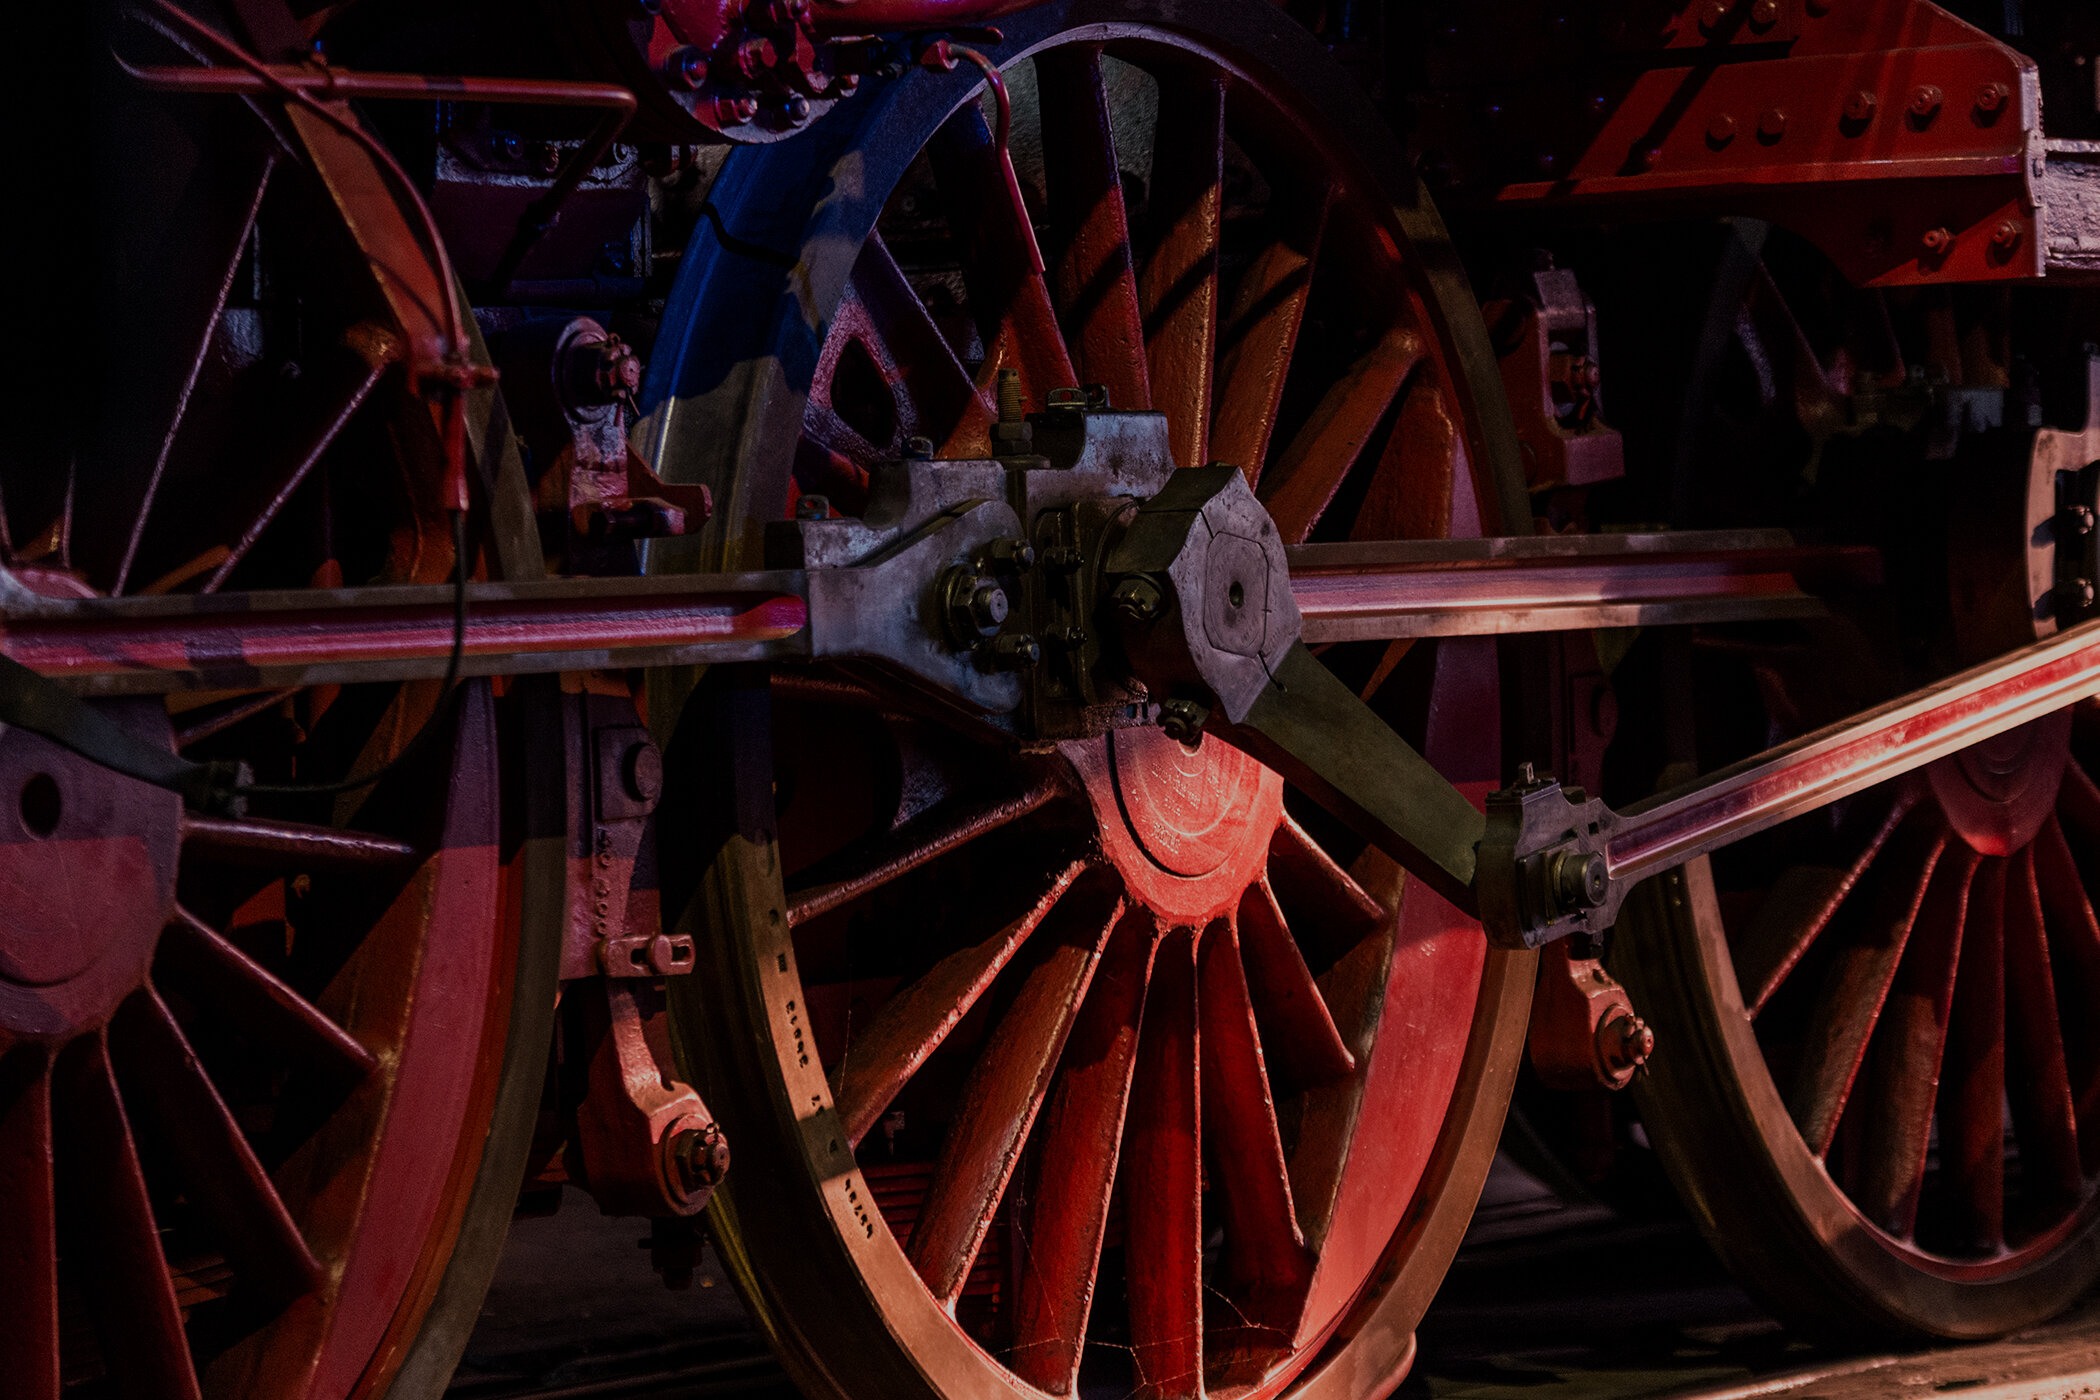 Rail wheels of a steam locomotive